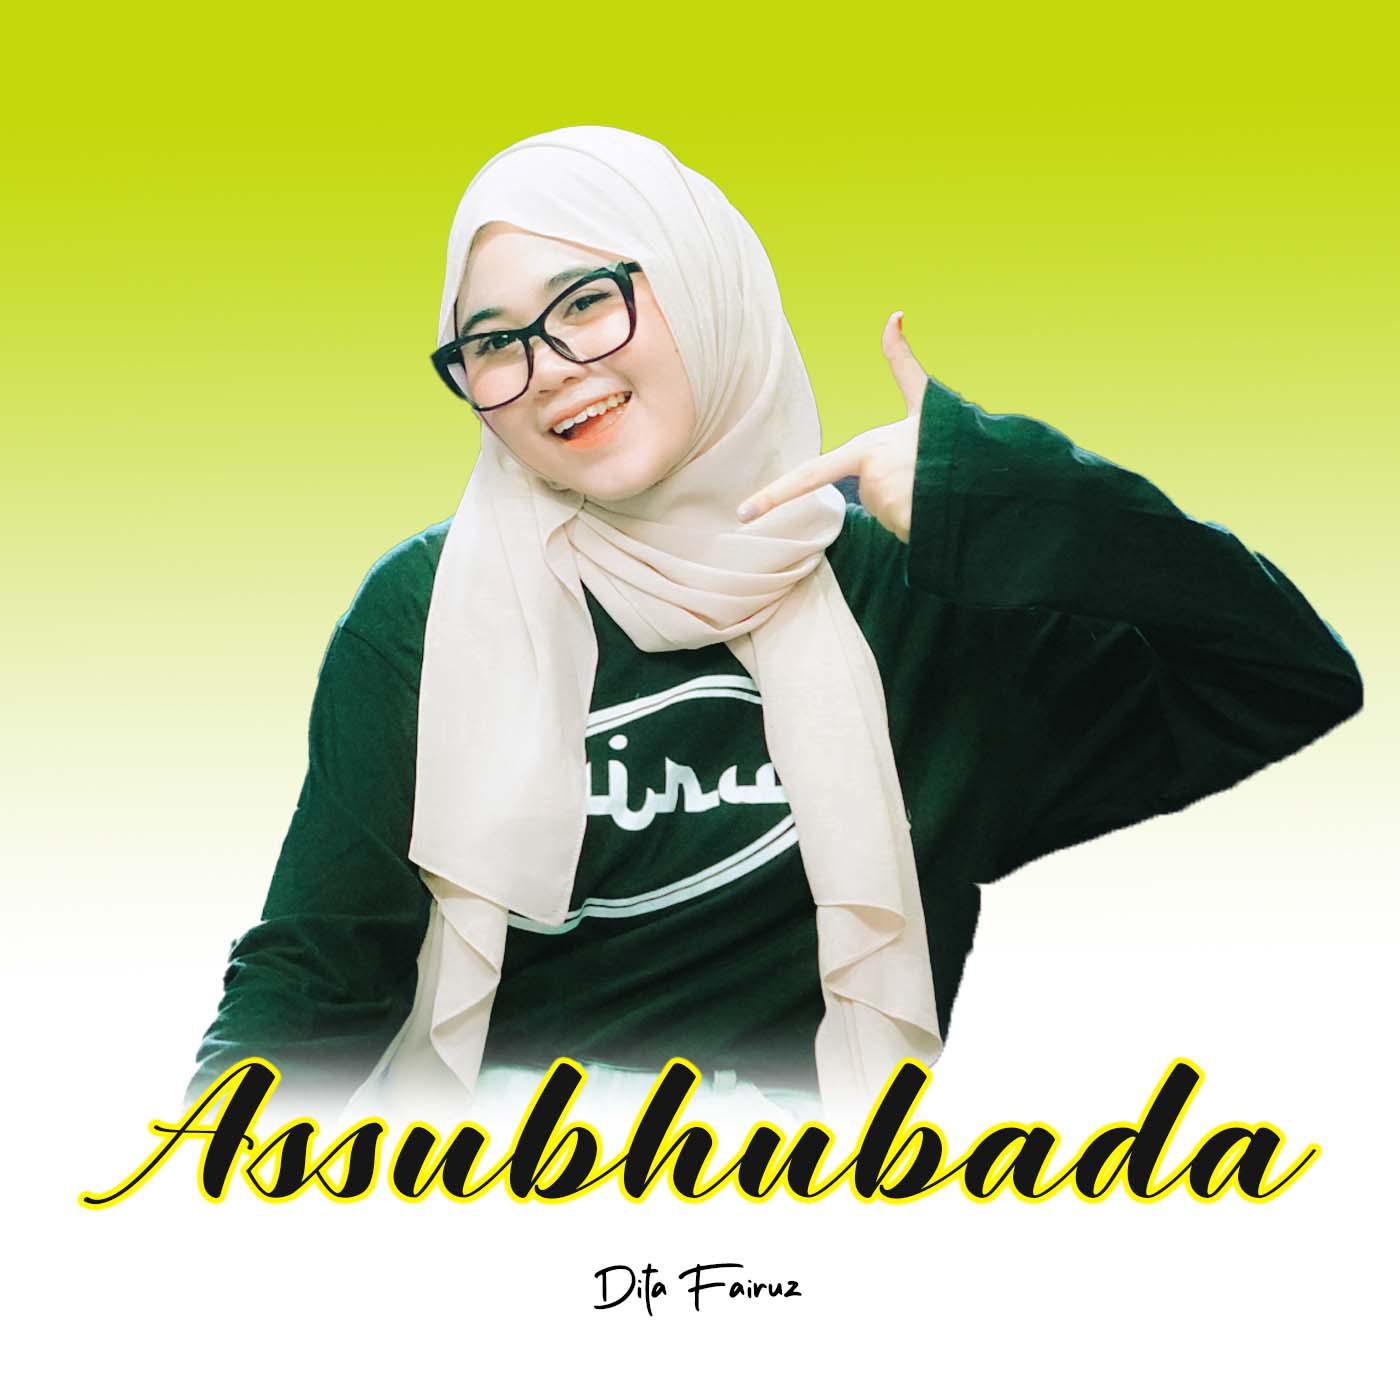 Постер альбома Assubhubada